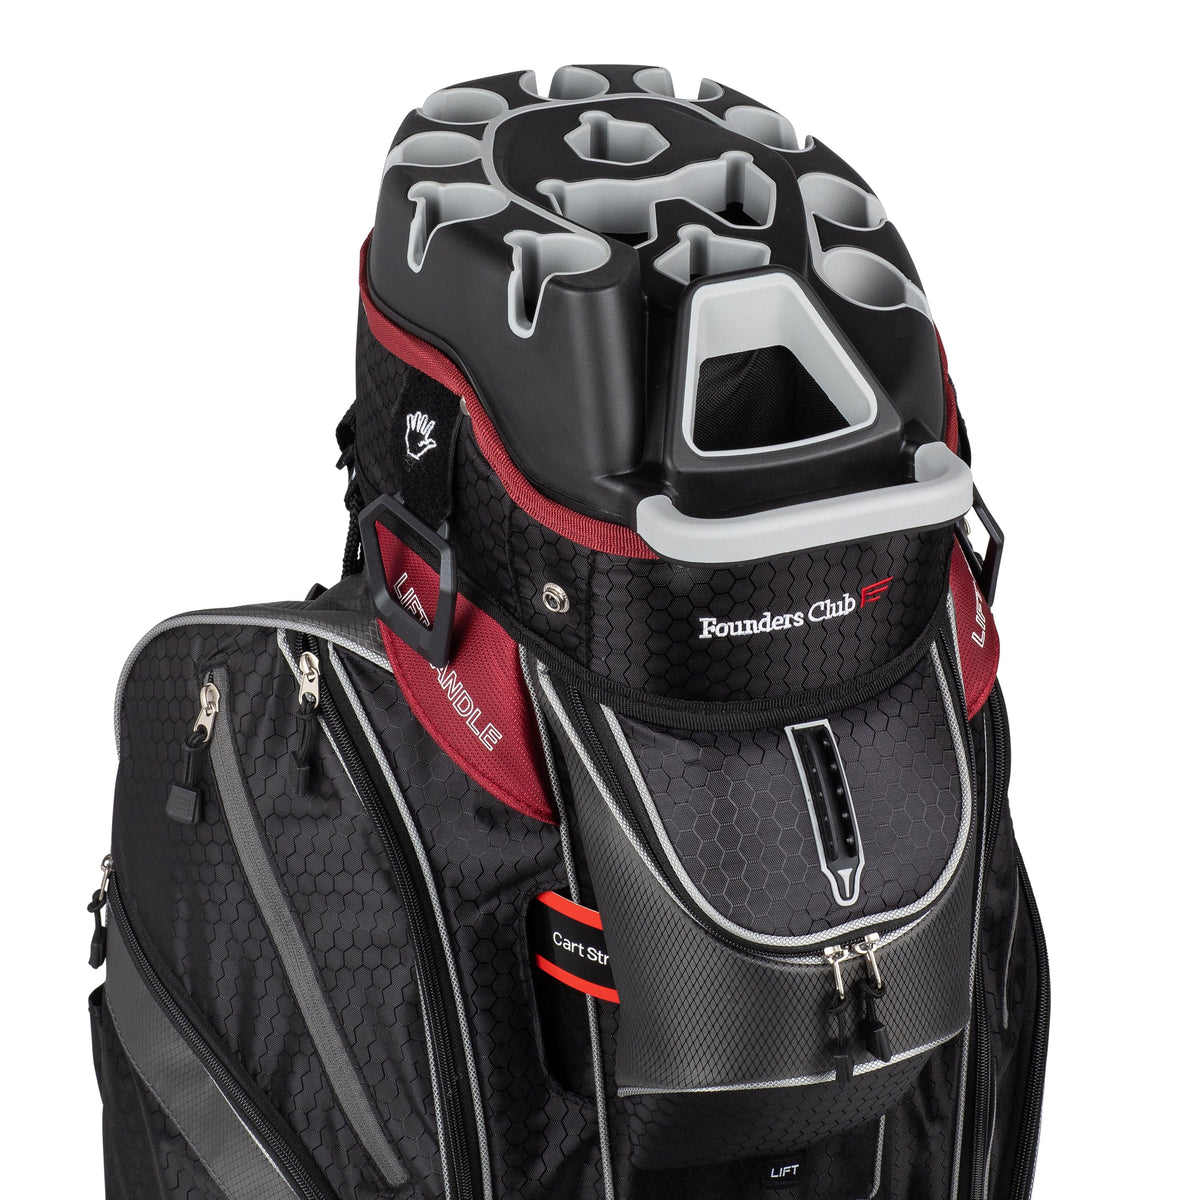 Founders Club Premium Organizer 14 Way Golf Cart Bag - Charcoal